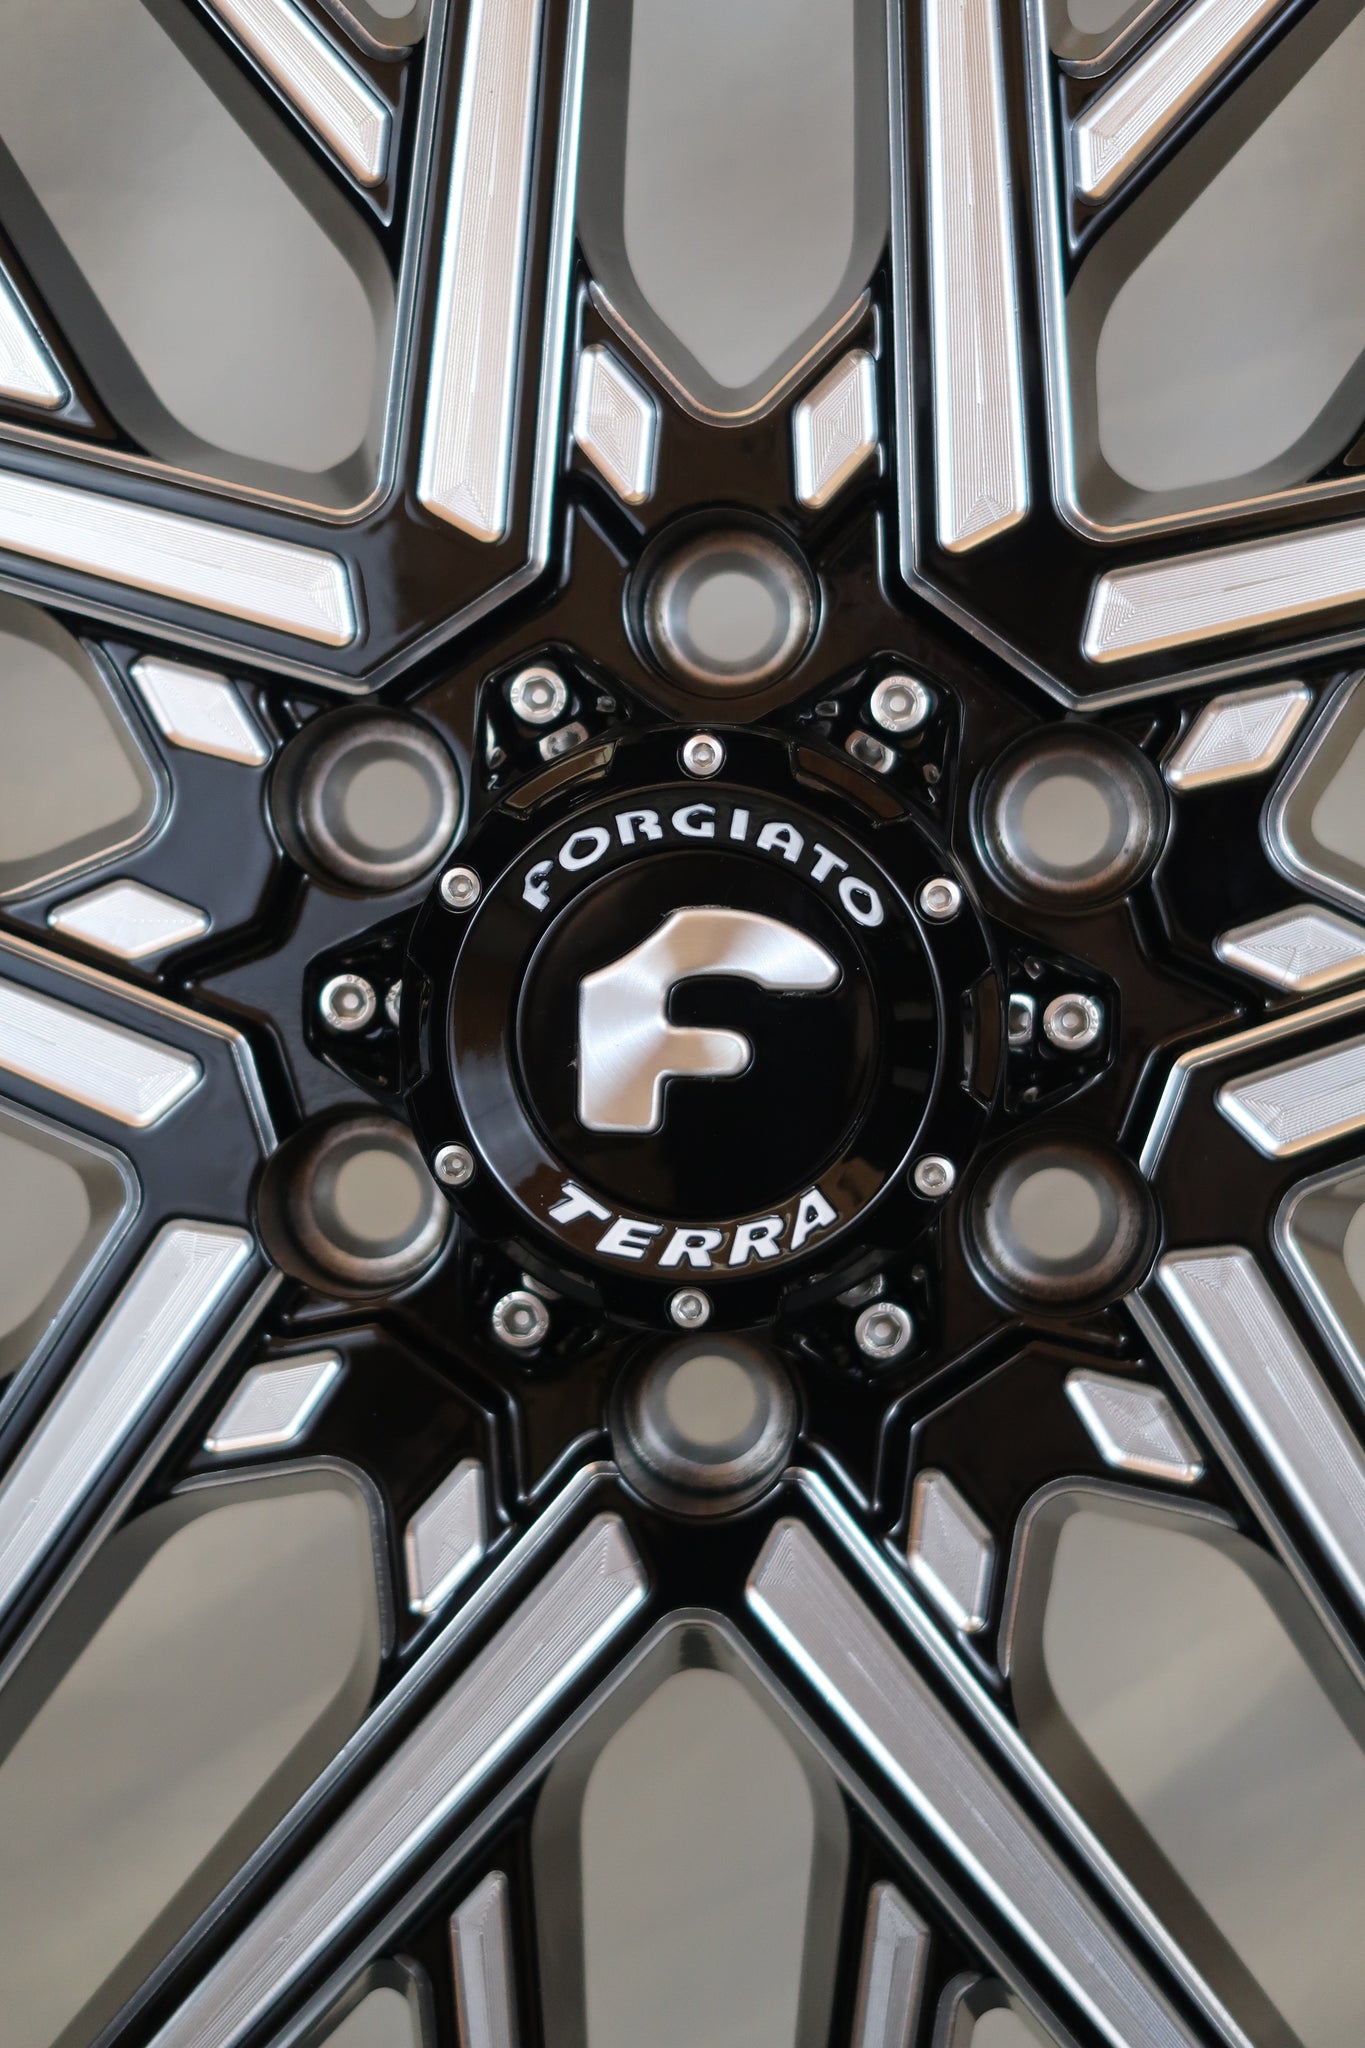 24x12 -44 6x139.7 Forgiato FLOW TERRA 003 Black Machined - Wheels | Rims